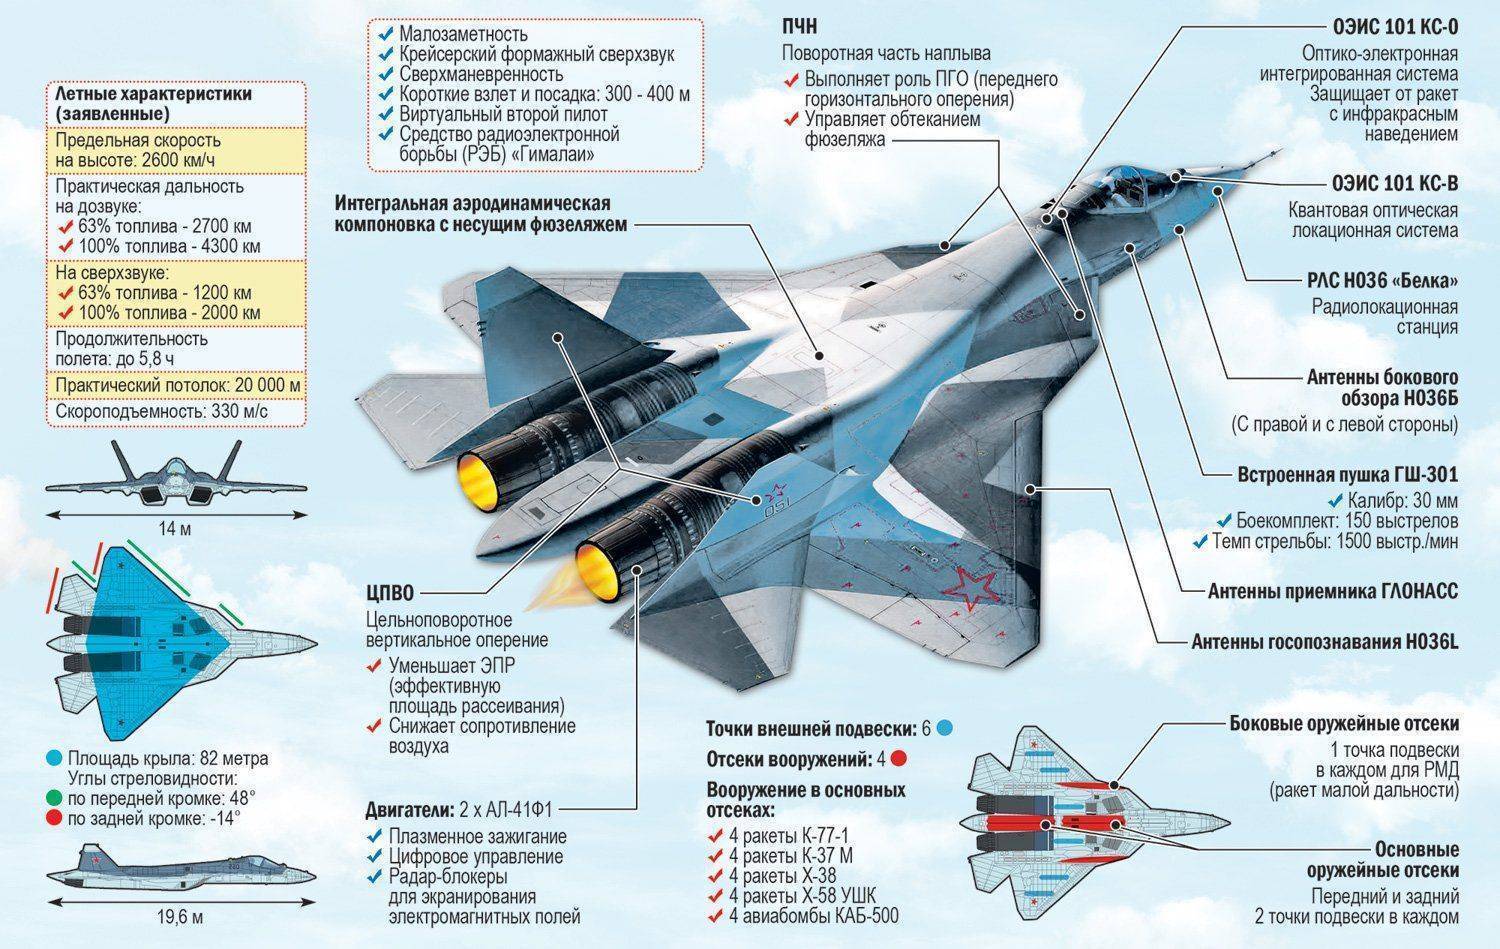 Характеристики истребителя су. Самолёт Су-57 характеристики. Су-35 истребитель 5-го поколения. Российский истребитель пятого поколения Су-57. Схема самолета Су 57.